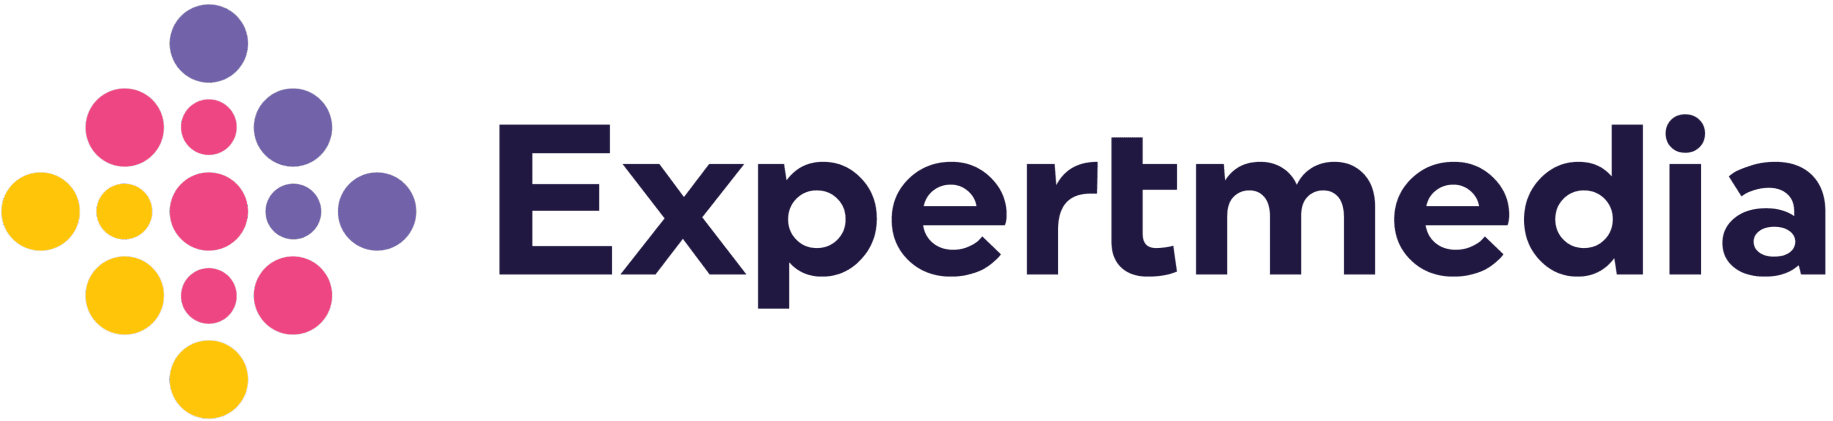 expert media logo